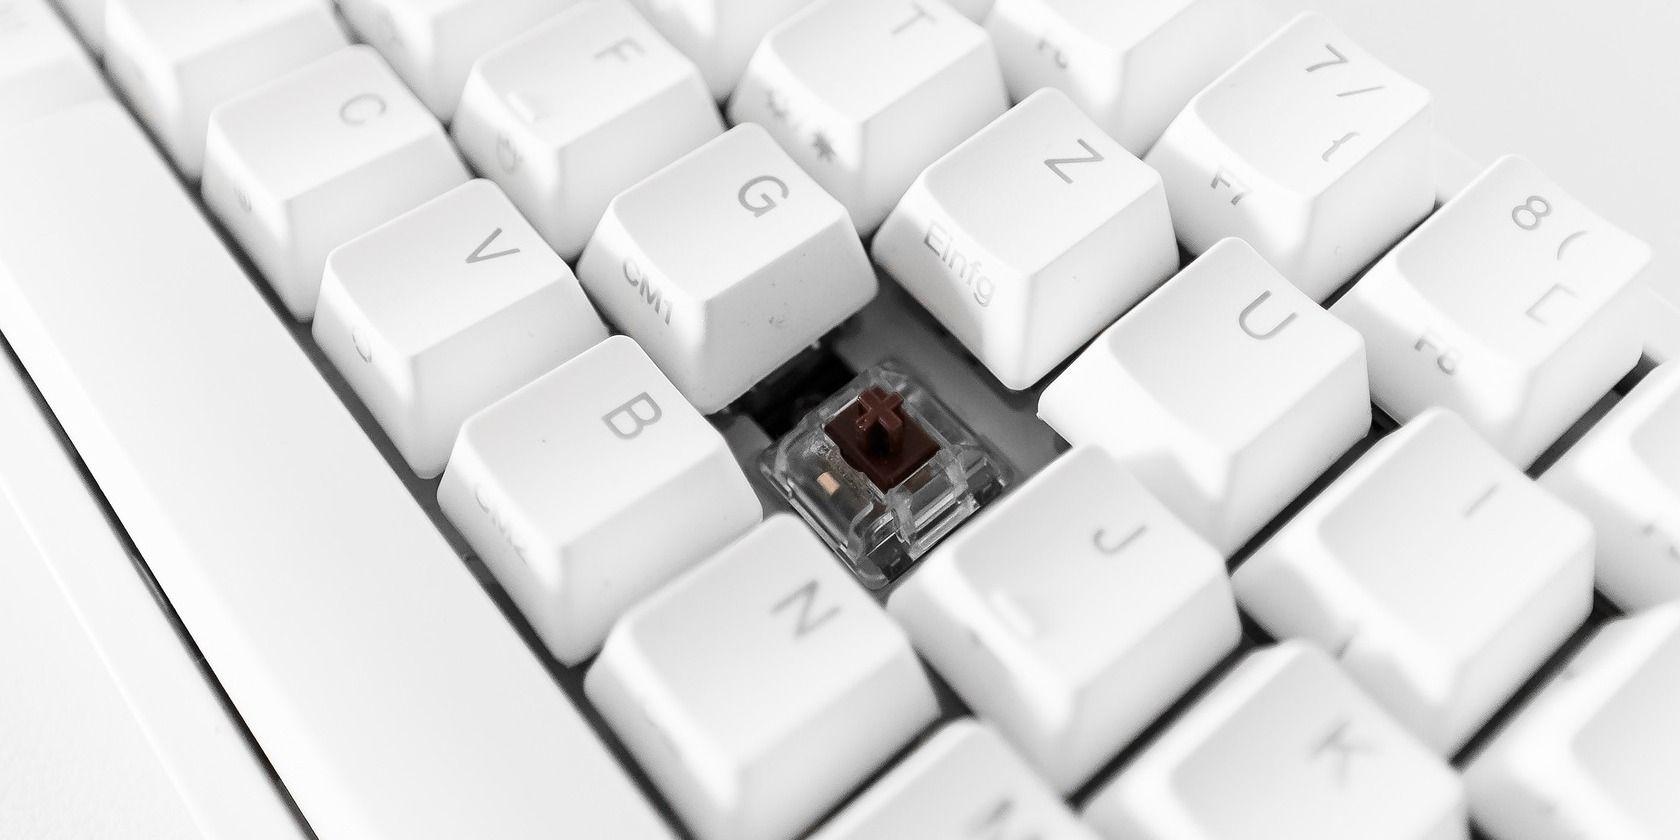 Mechanical Switch on Keyboard